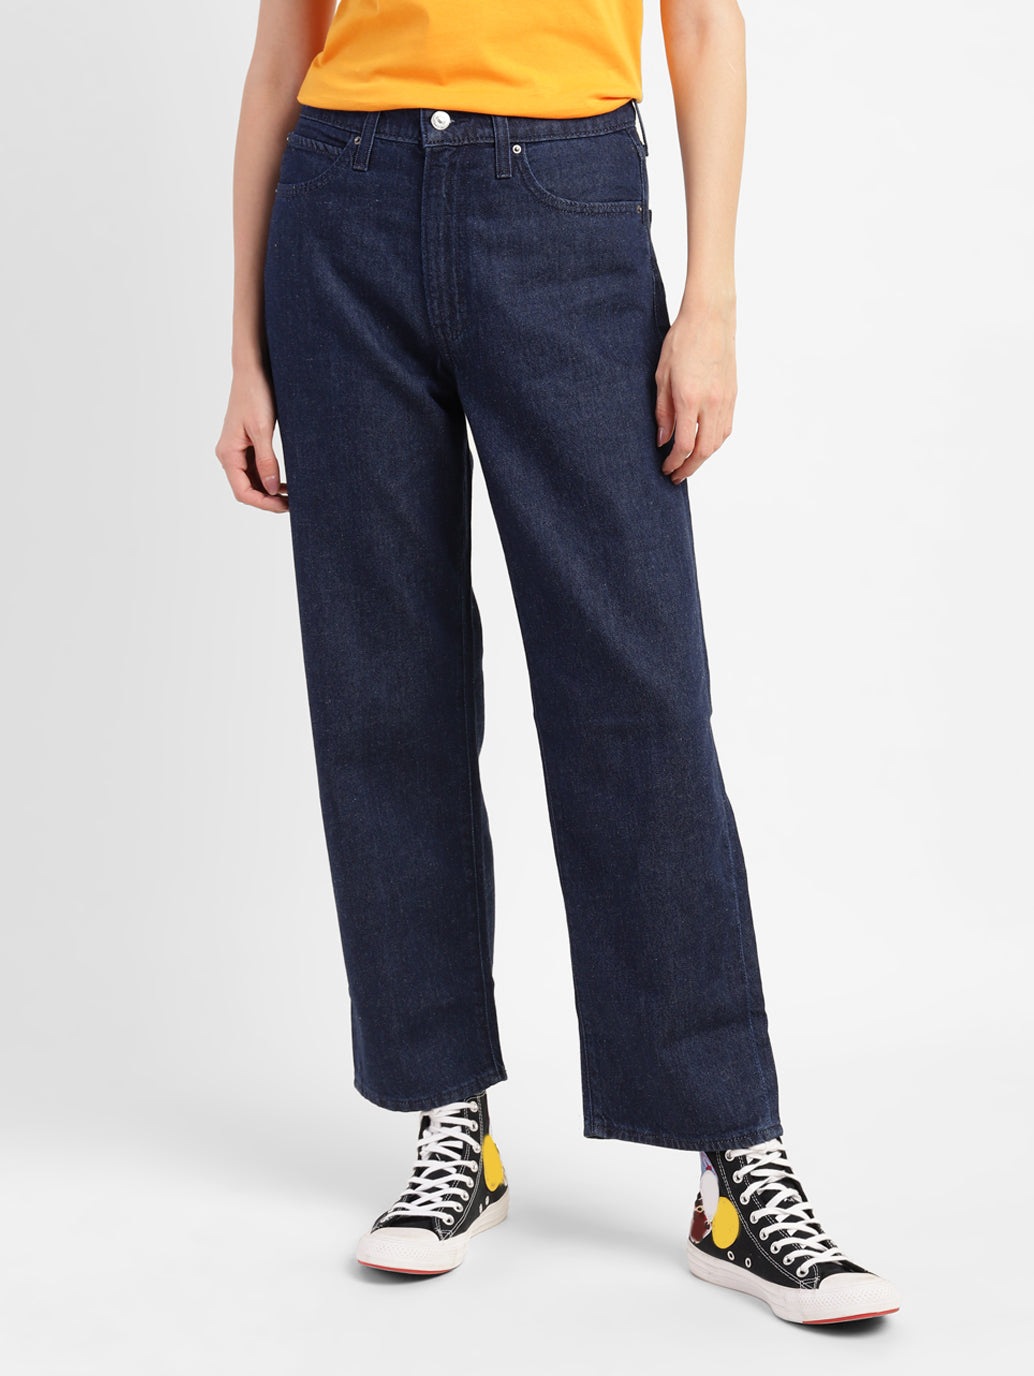 Women's 94's Loose Fit Jeans